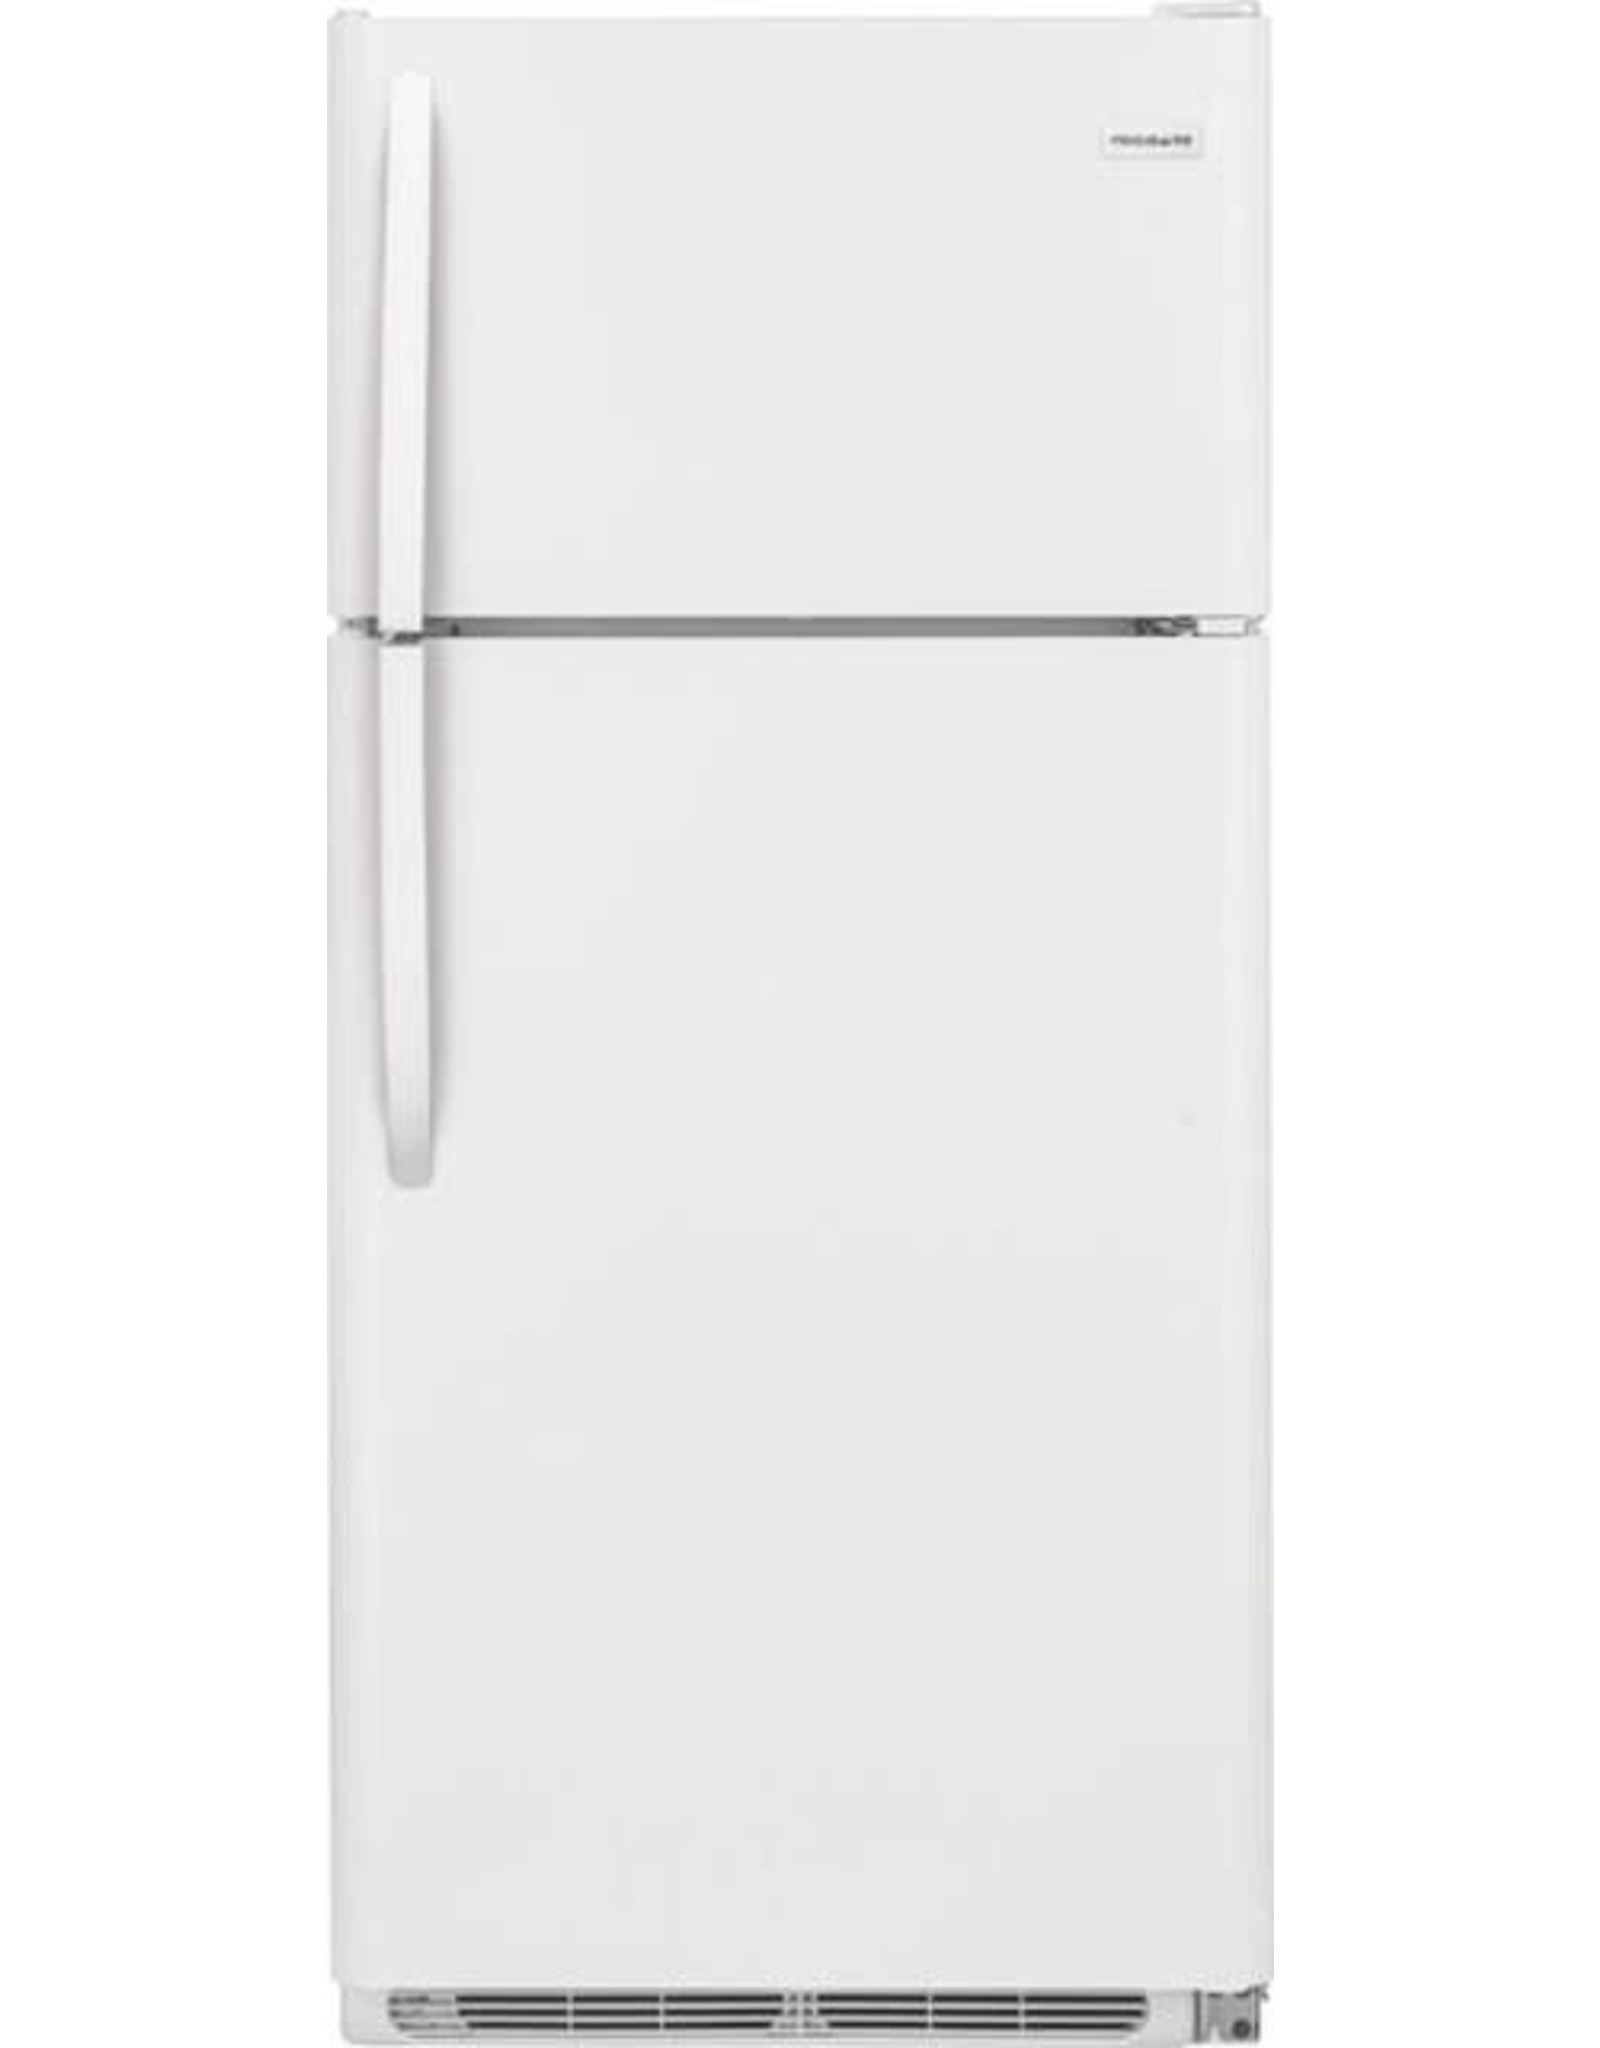 FFTR1814TW 18 cu. ft. 001641 Top Freezer Refrigerator in White